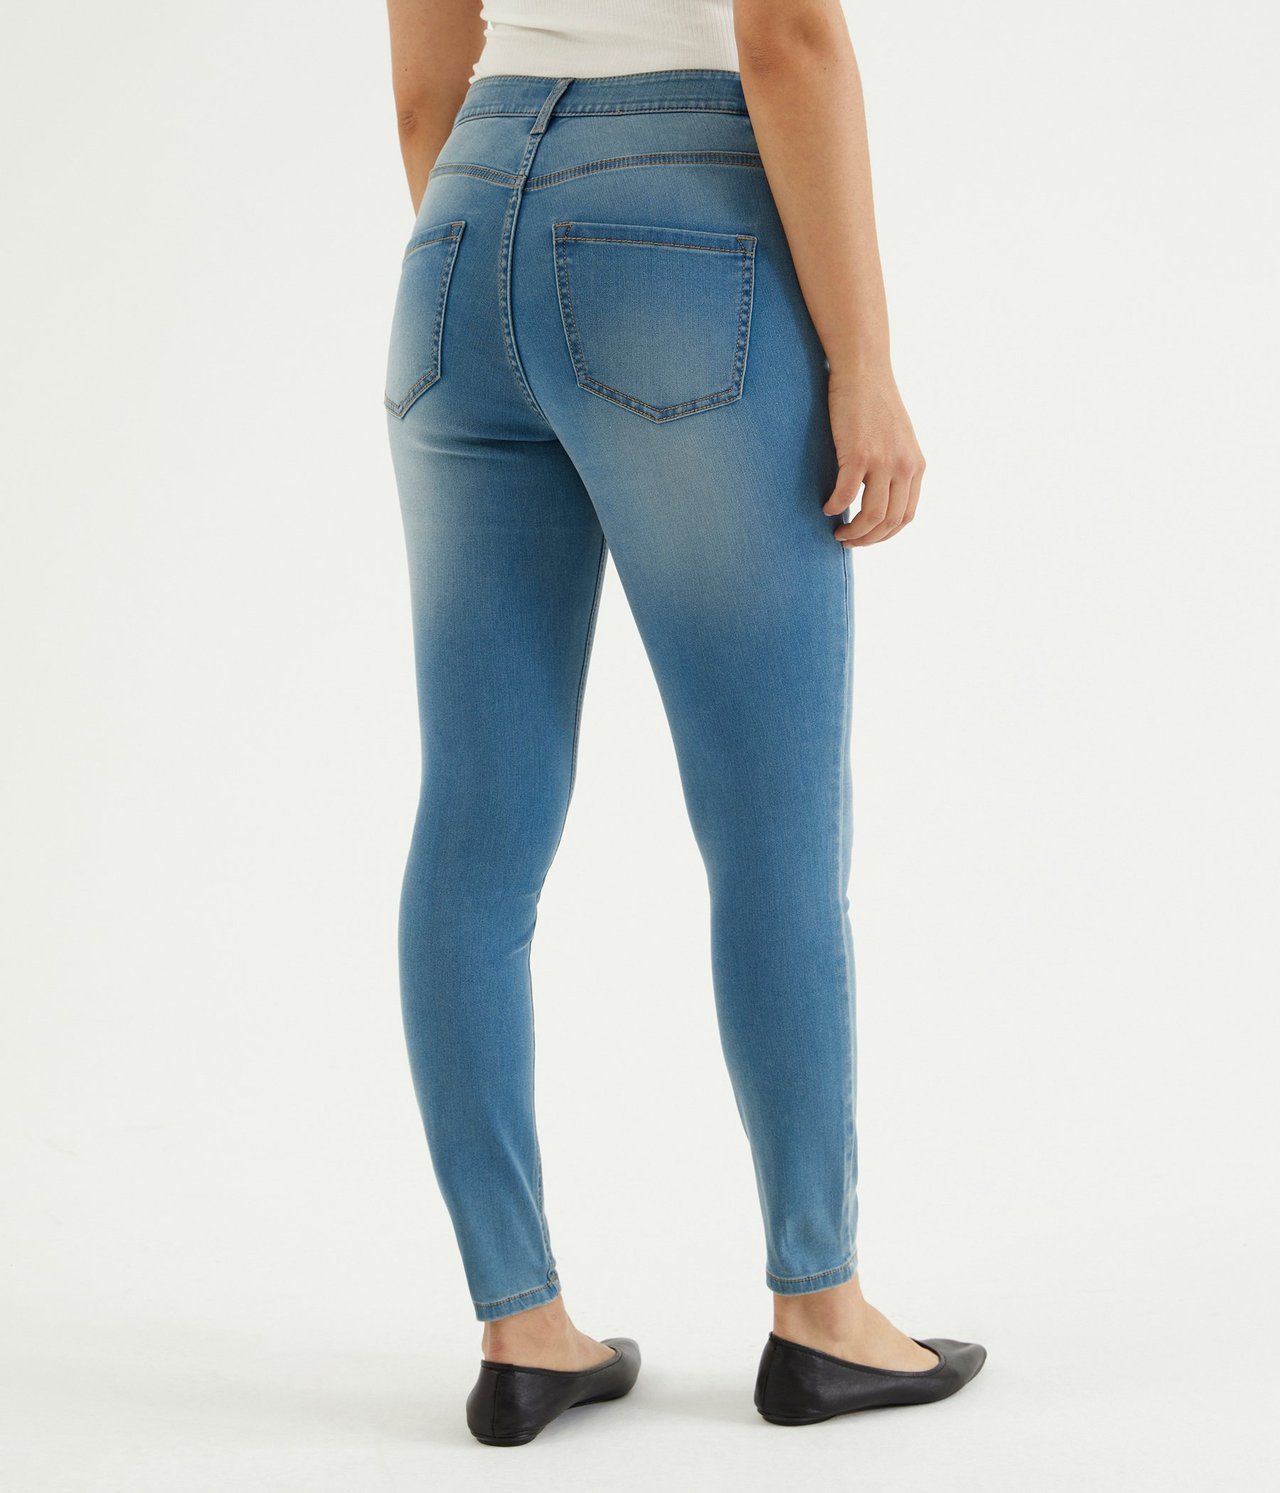 Super slim jeans short leg - Denimi - 8